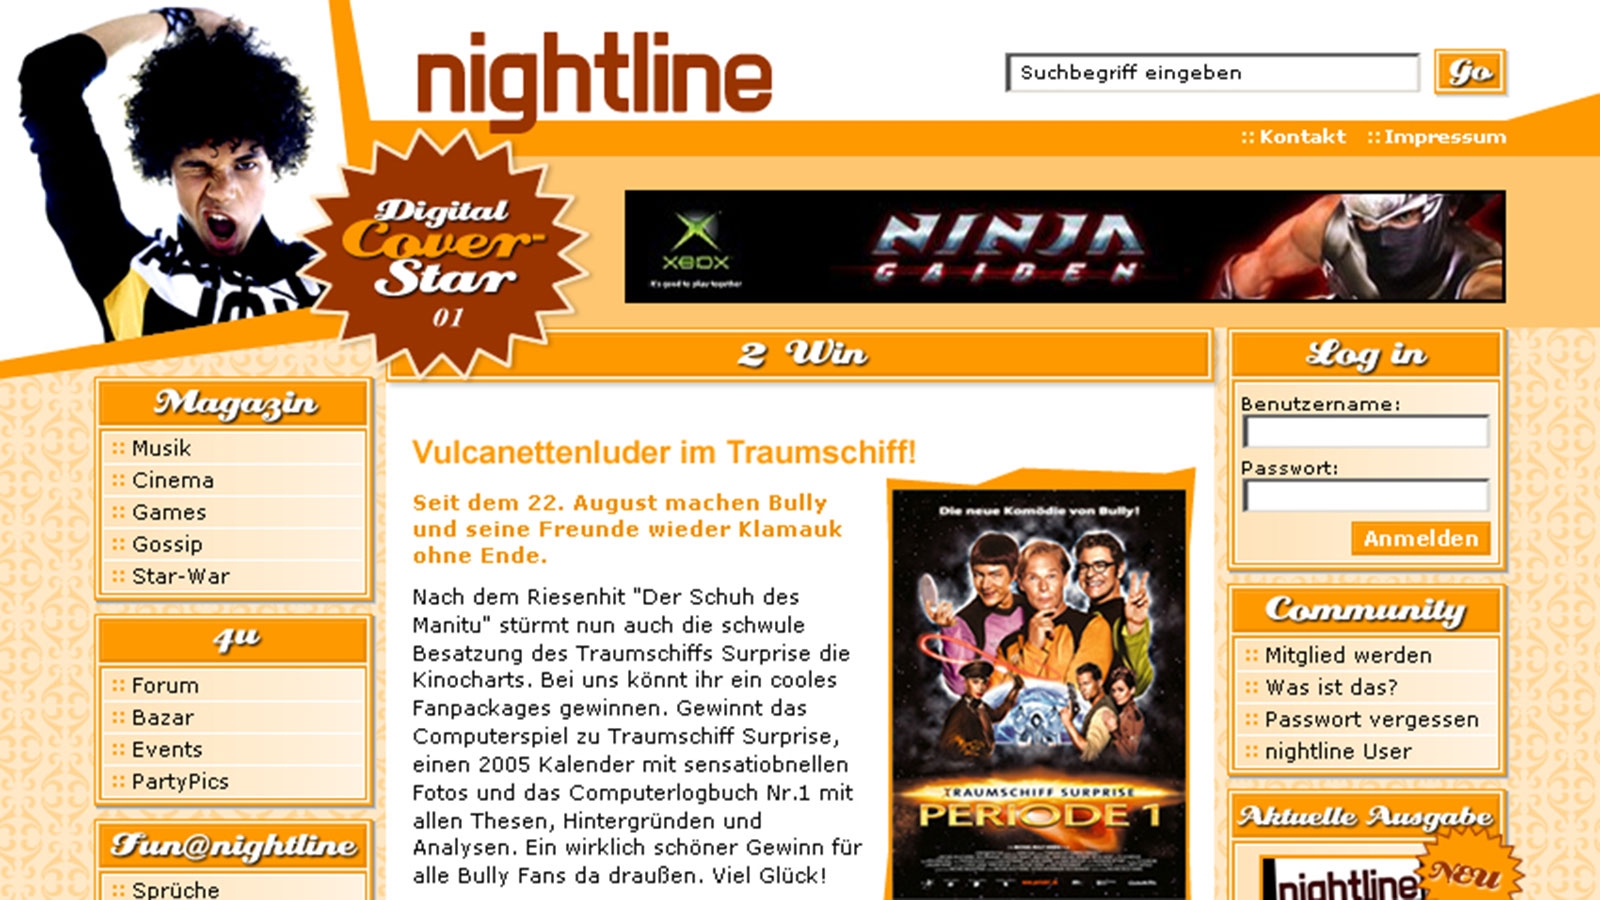 Nightline | nightline.cc | 2004 (Screen Only 02) © echonet communication